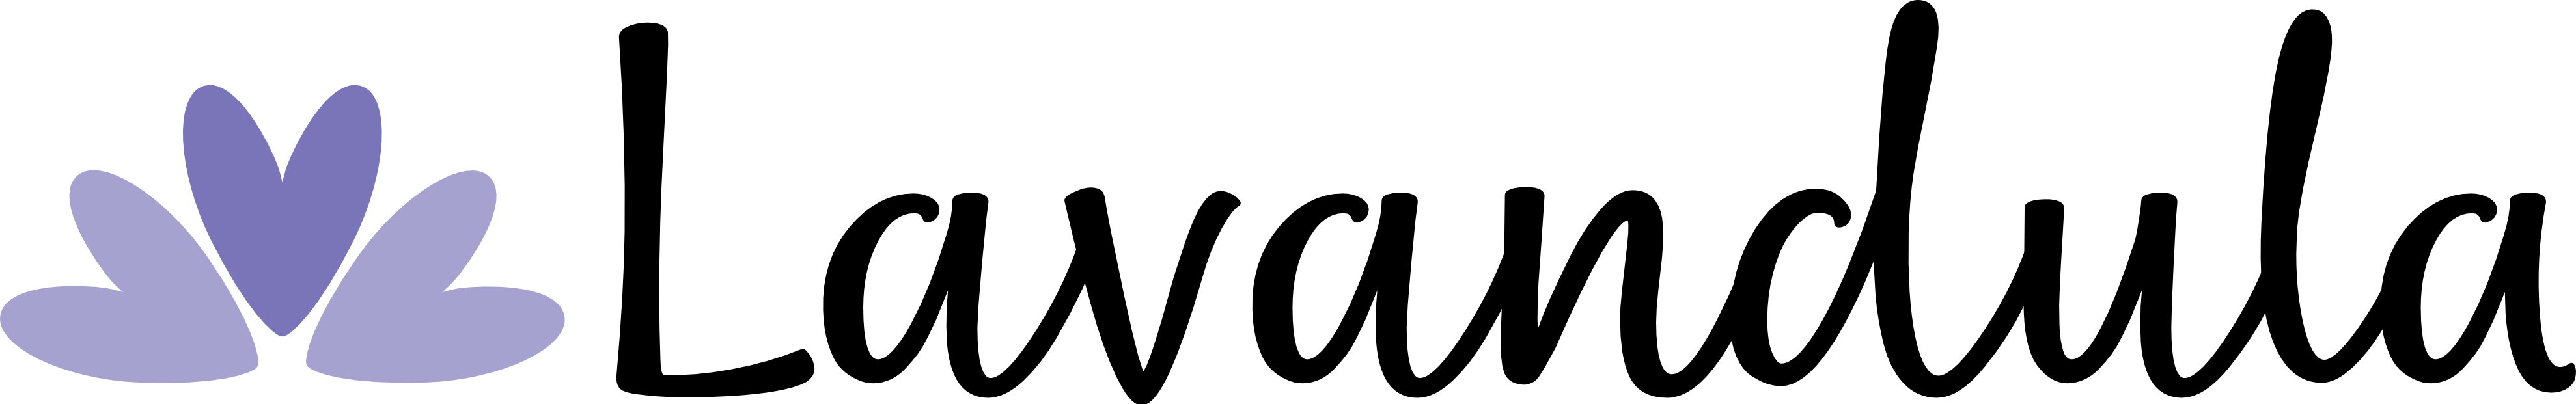 cropped-Lavandula-verkkokauppa-logo.png